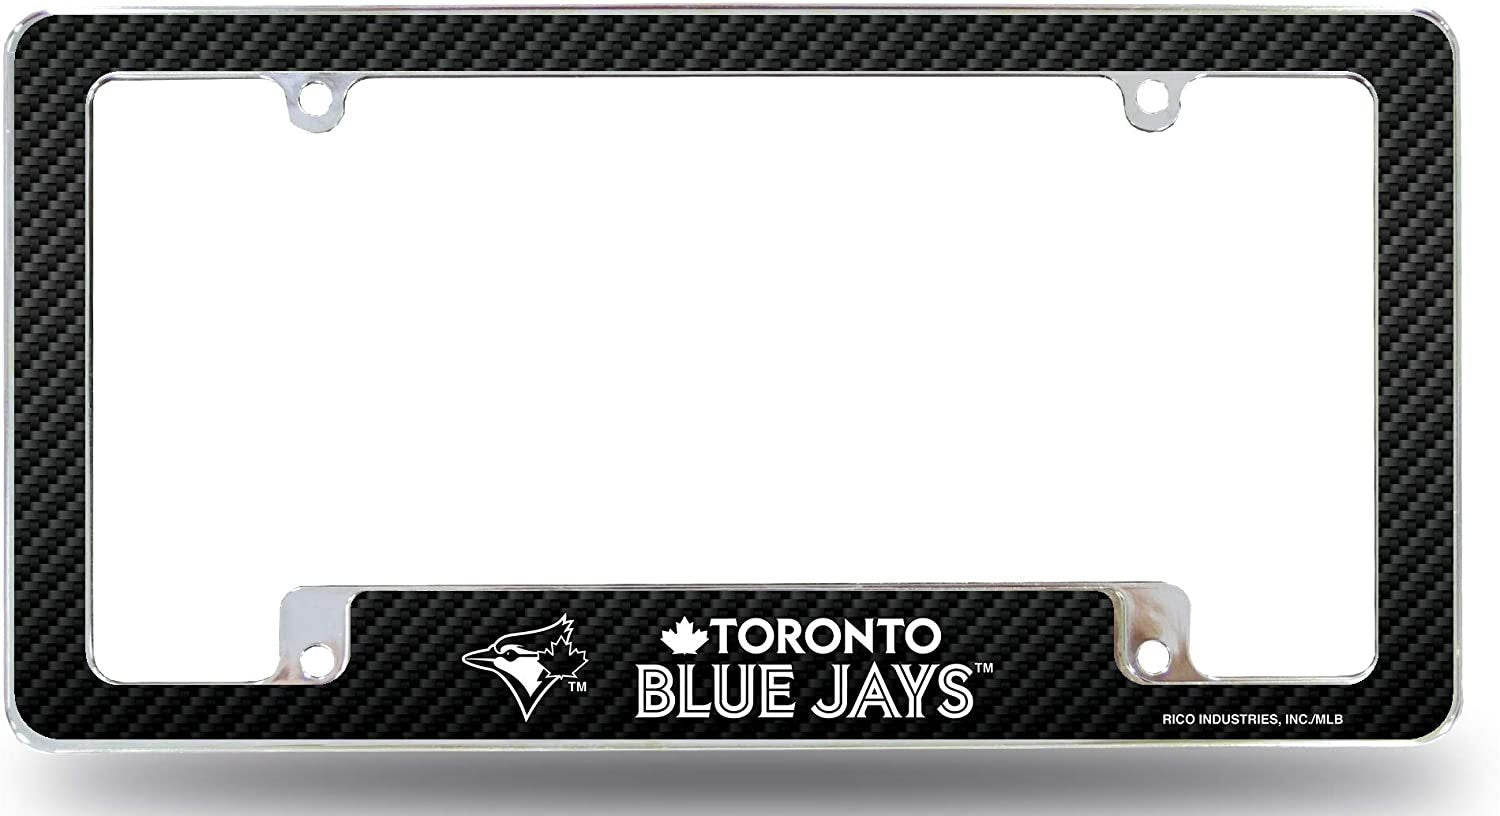 Toronto Blue Jays Metal License Plate Frame Chrome Tag Cover, Carbon Fiber Design, 12x6 Inch